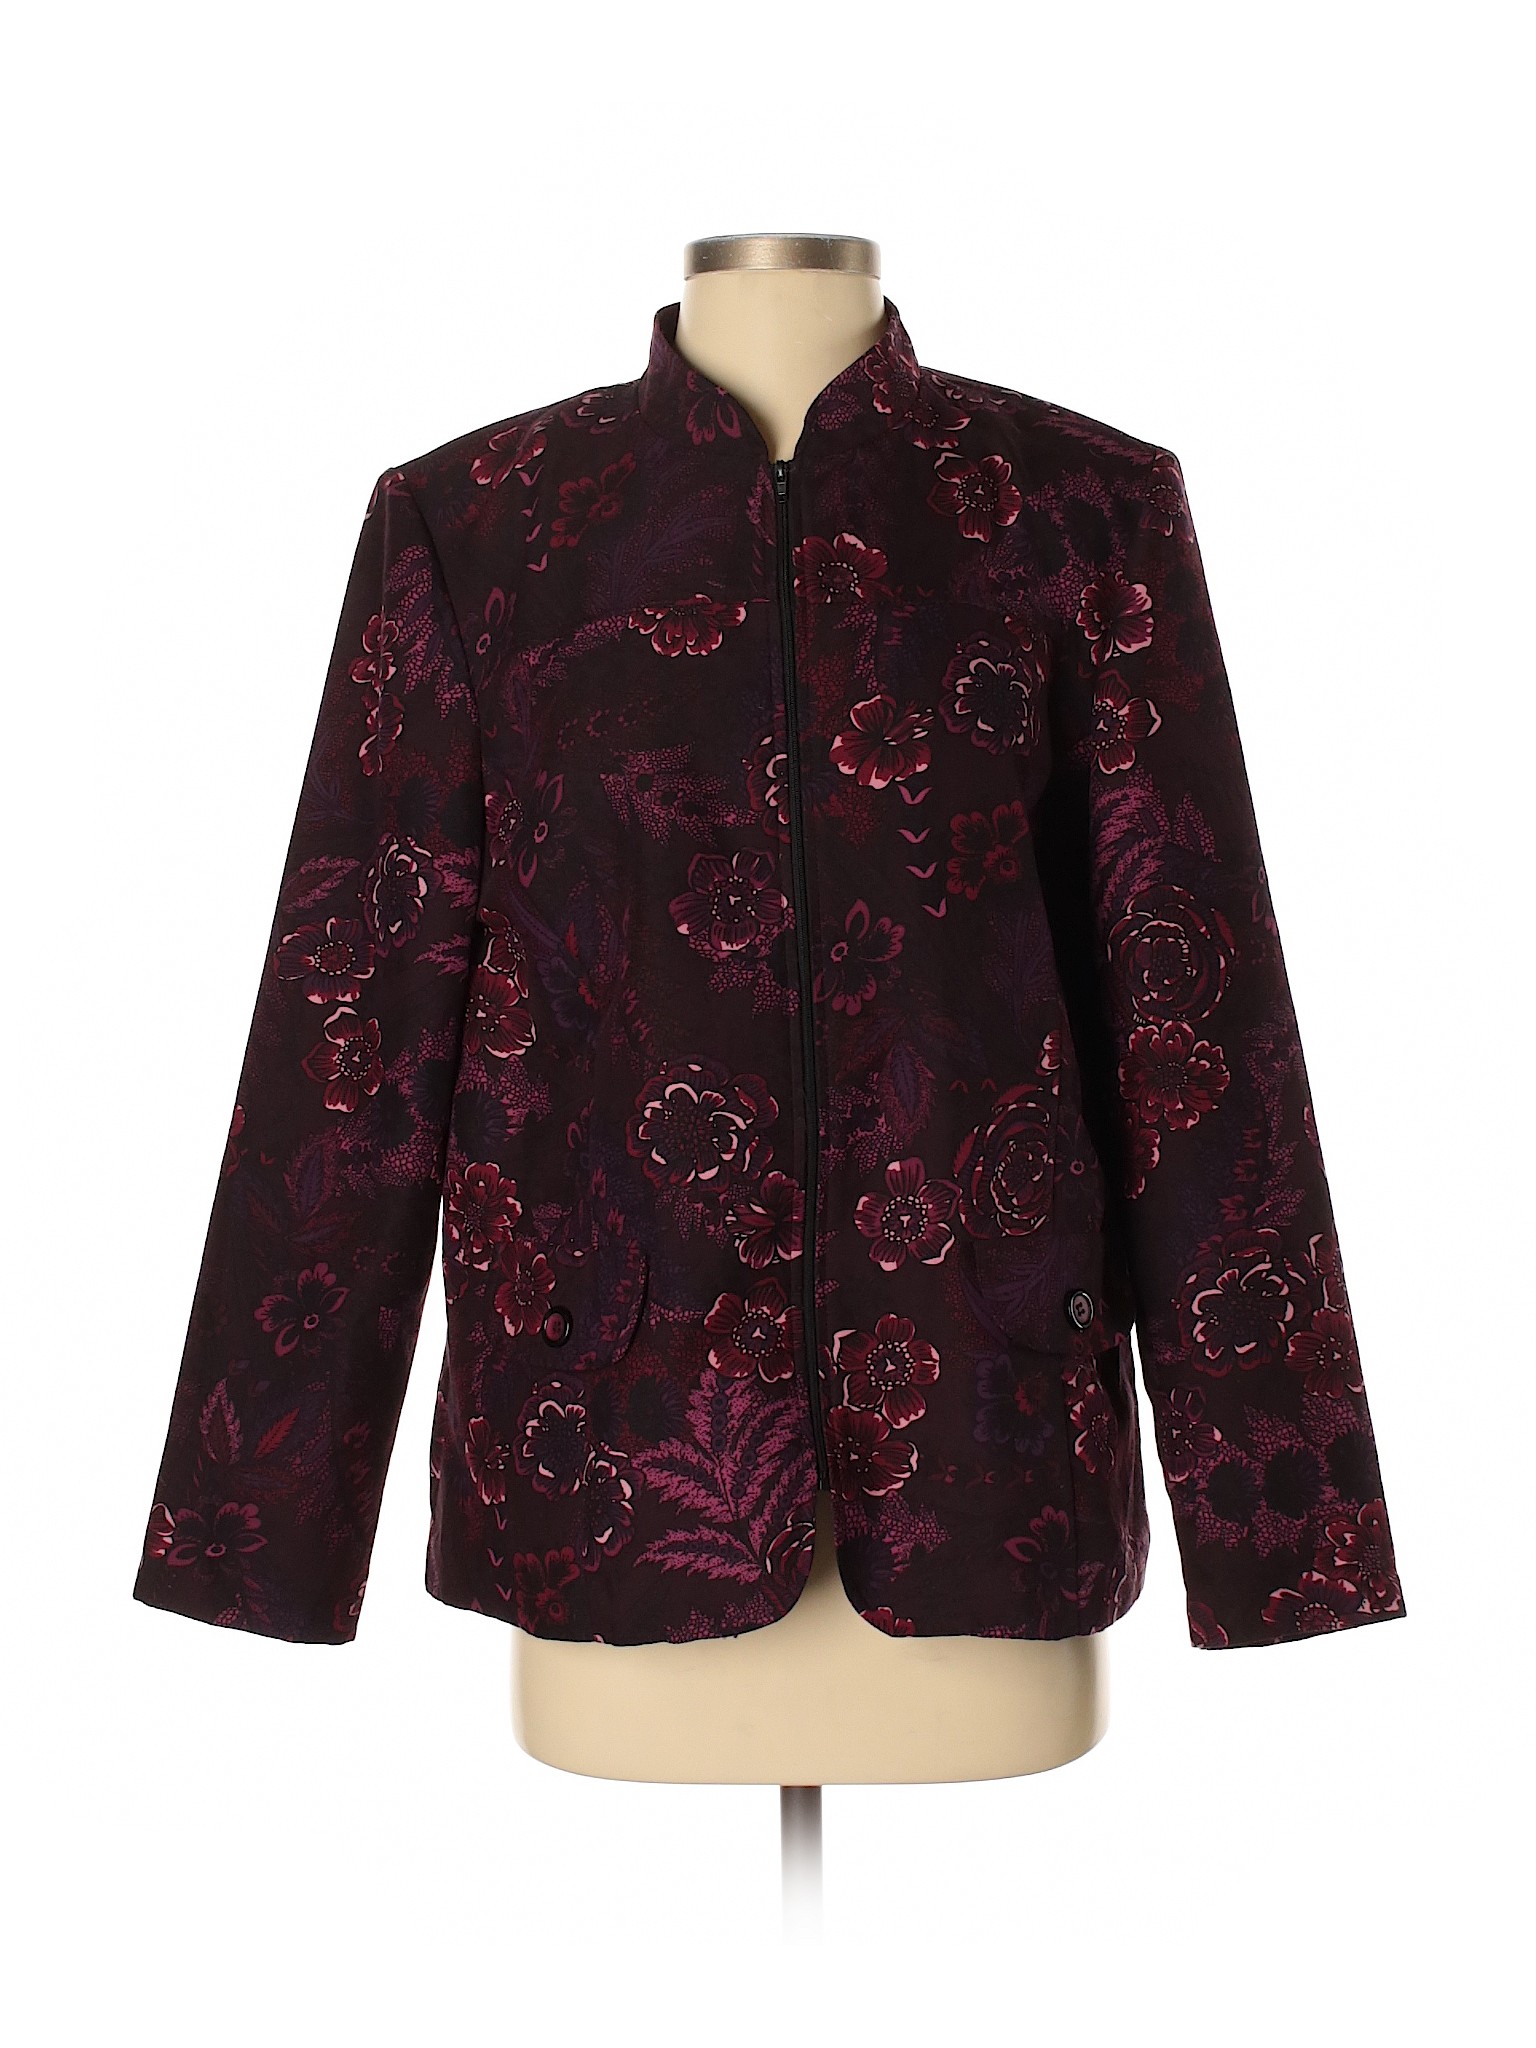 Blair Women Purple Jacket M | eBay